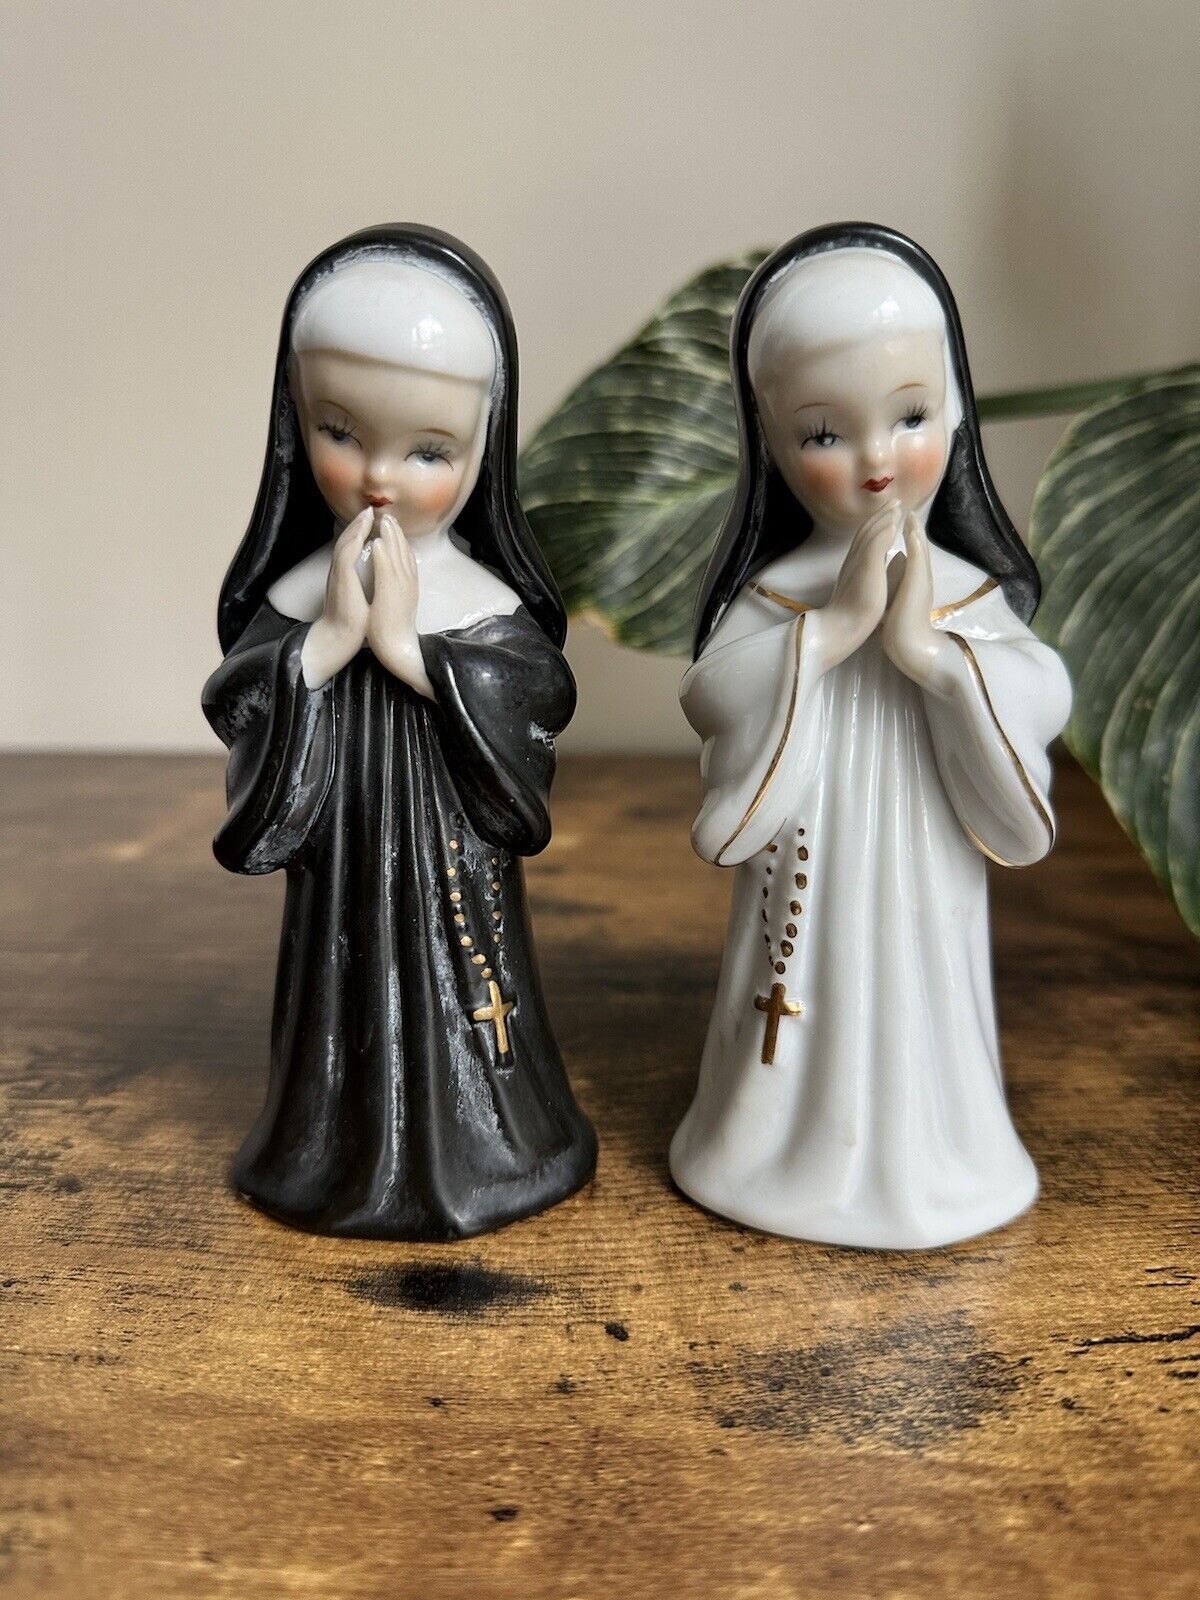 Set (2) 1950s Lipper & Mann Ceramic Nun Figurines Black White Habits Pray Japan